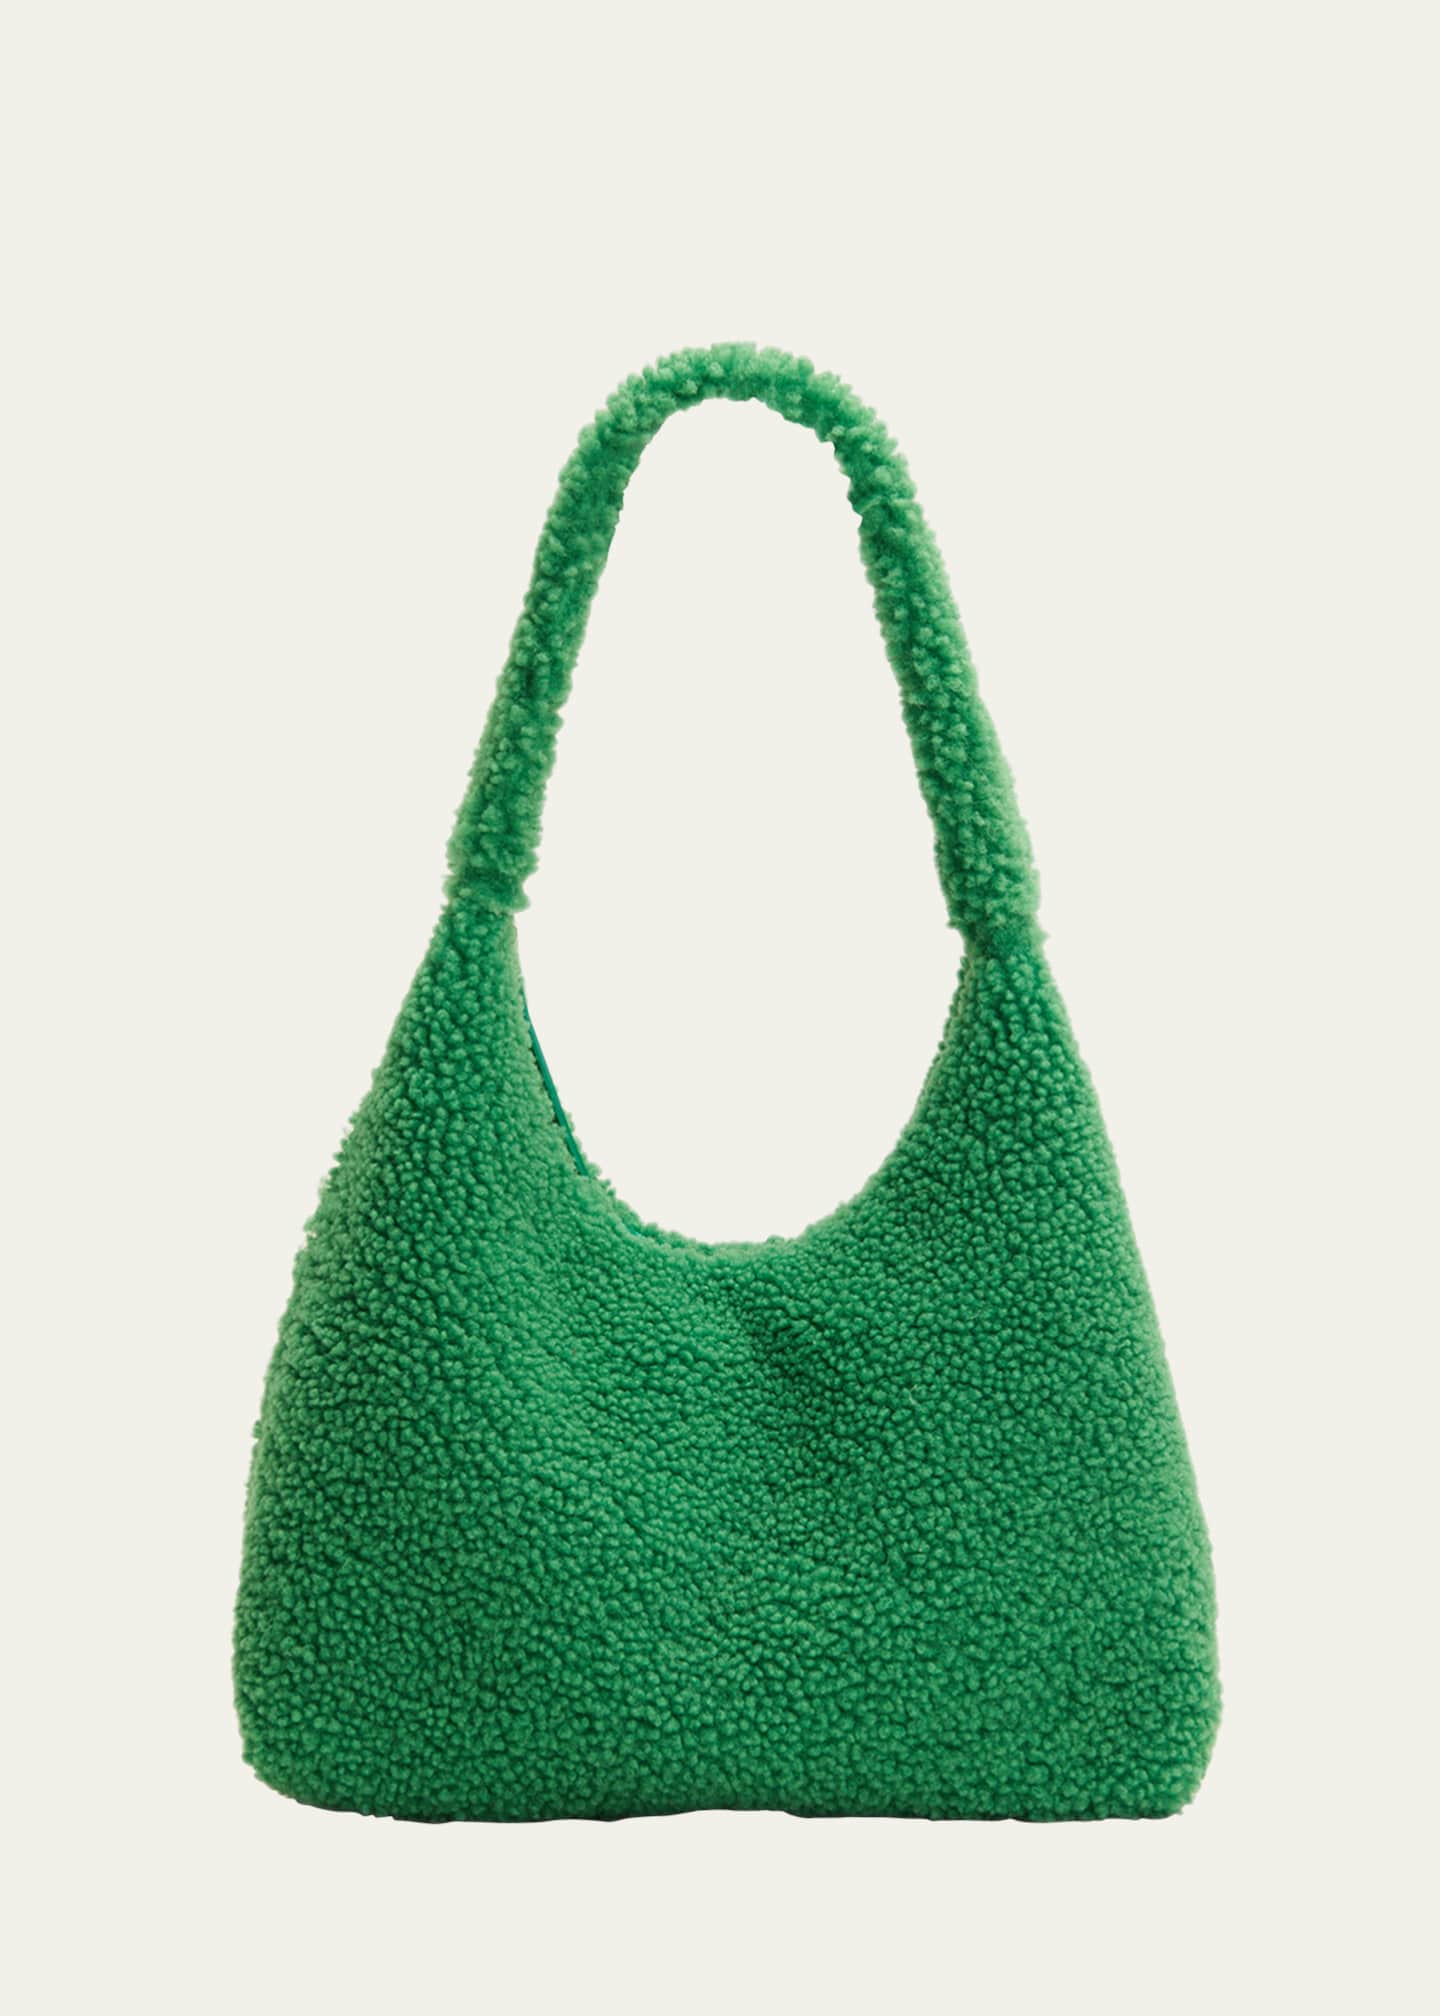 Mansur Gavriel Lady Mini Soft Leather Messenger Bag - Bergdorf Goodman